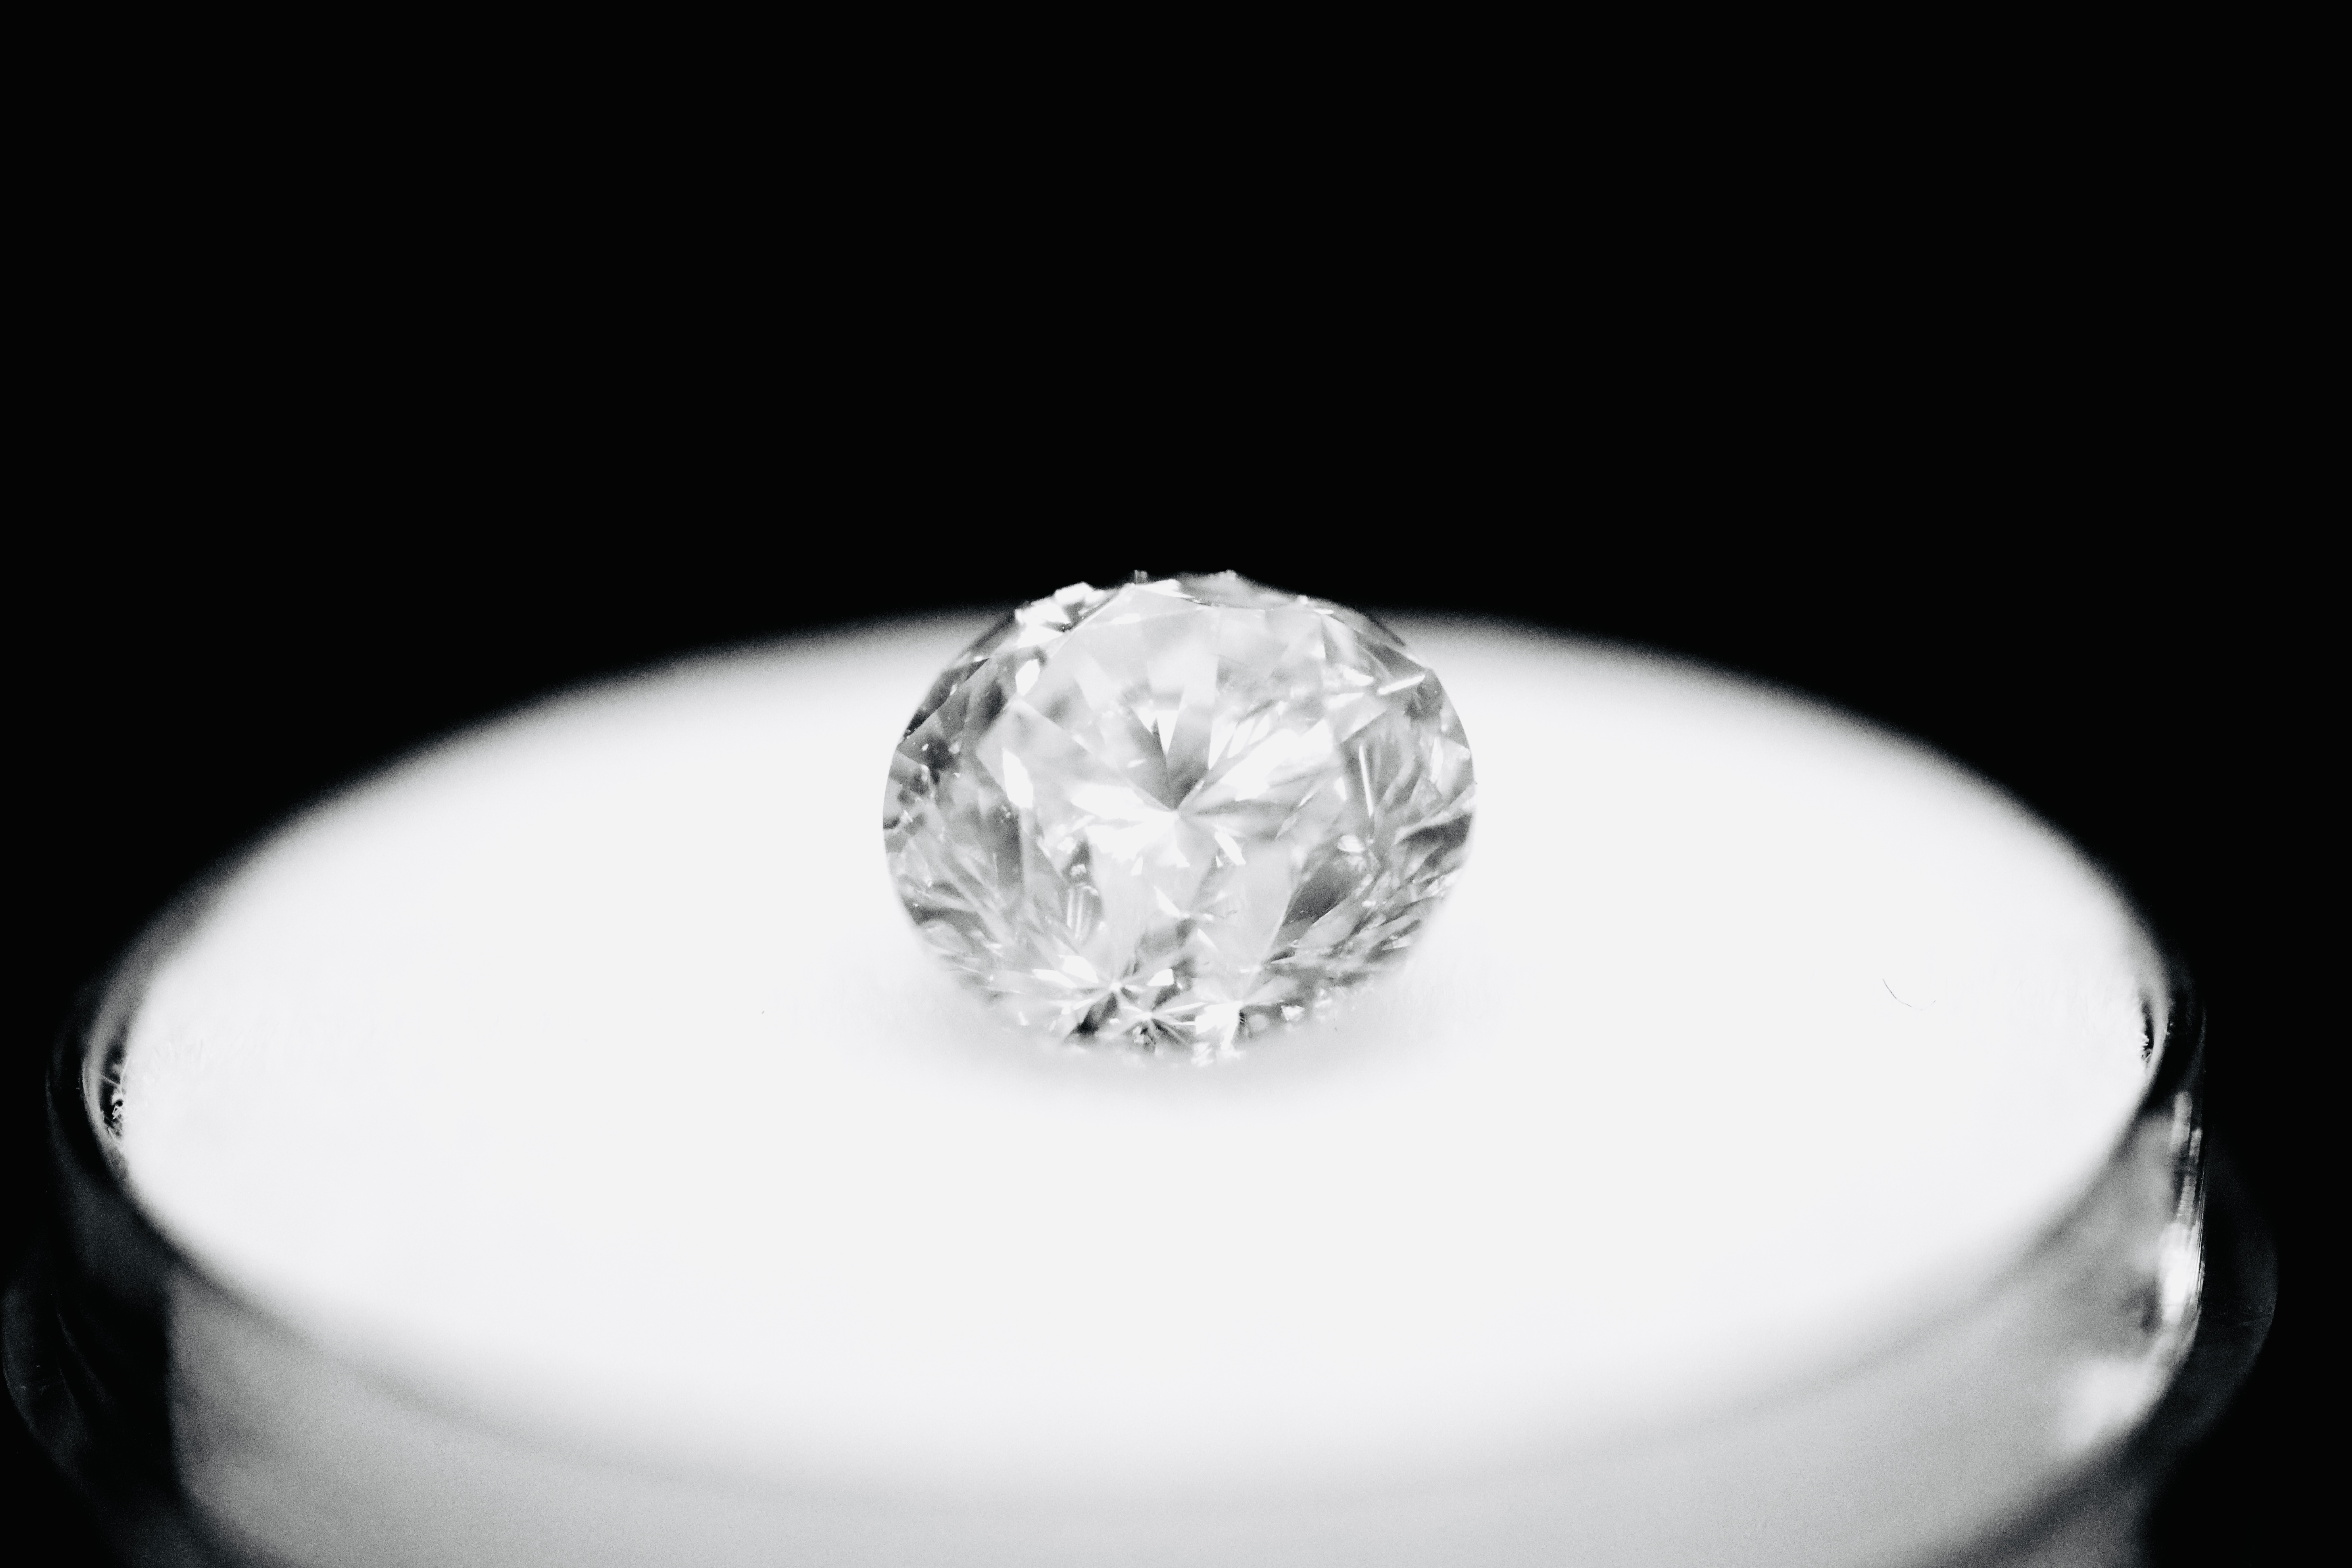 Single - DGI Round Brilliant Cut Natural Diamond 2.00 Carat D Colour Clarity VS2 - 142590145